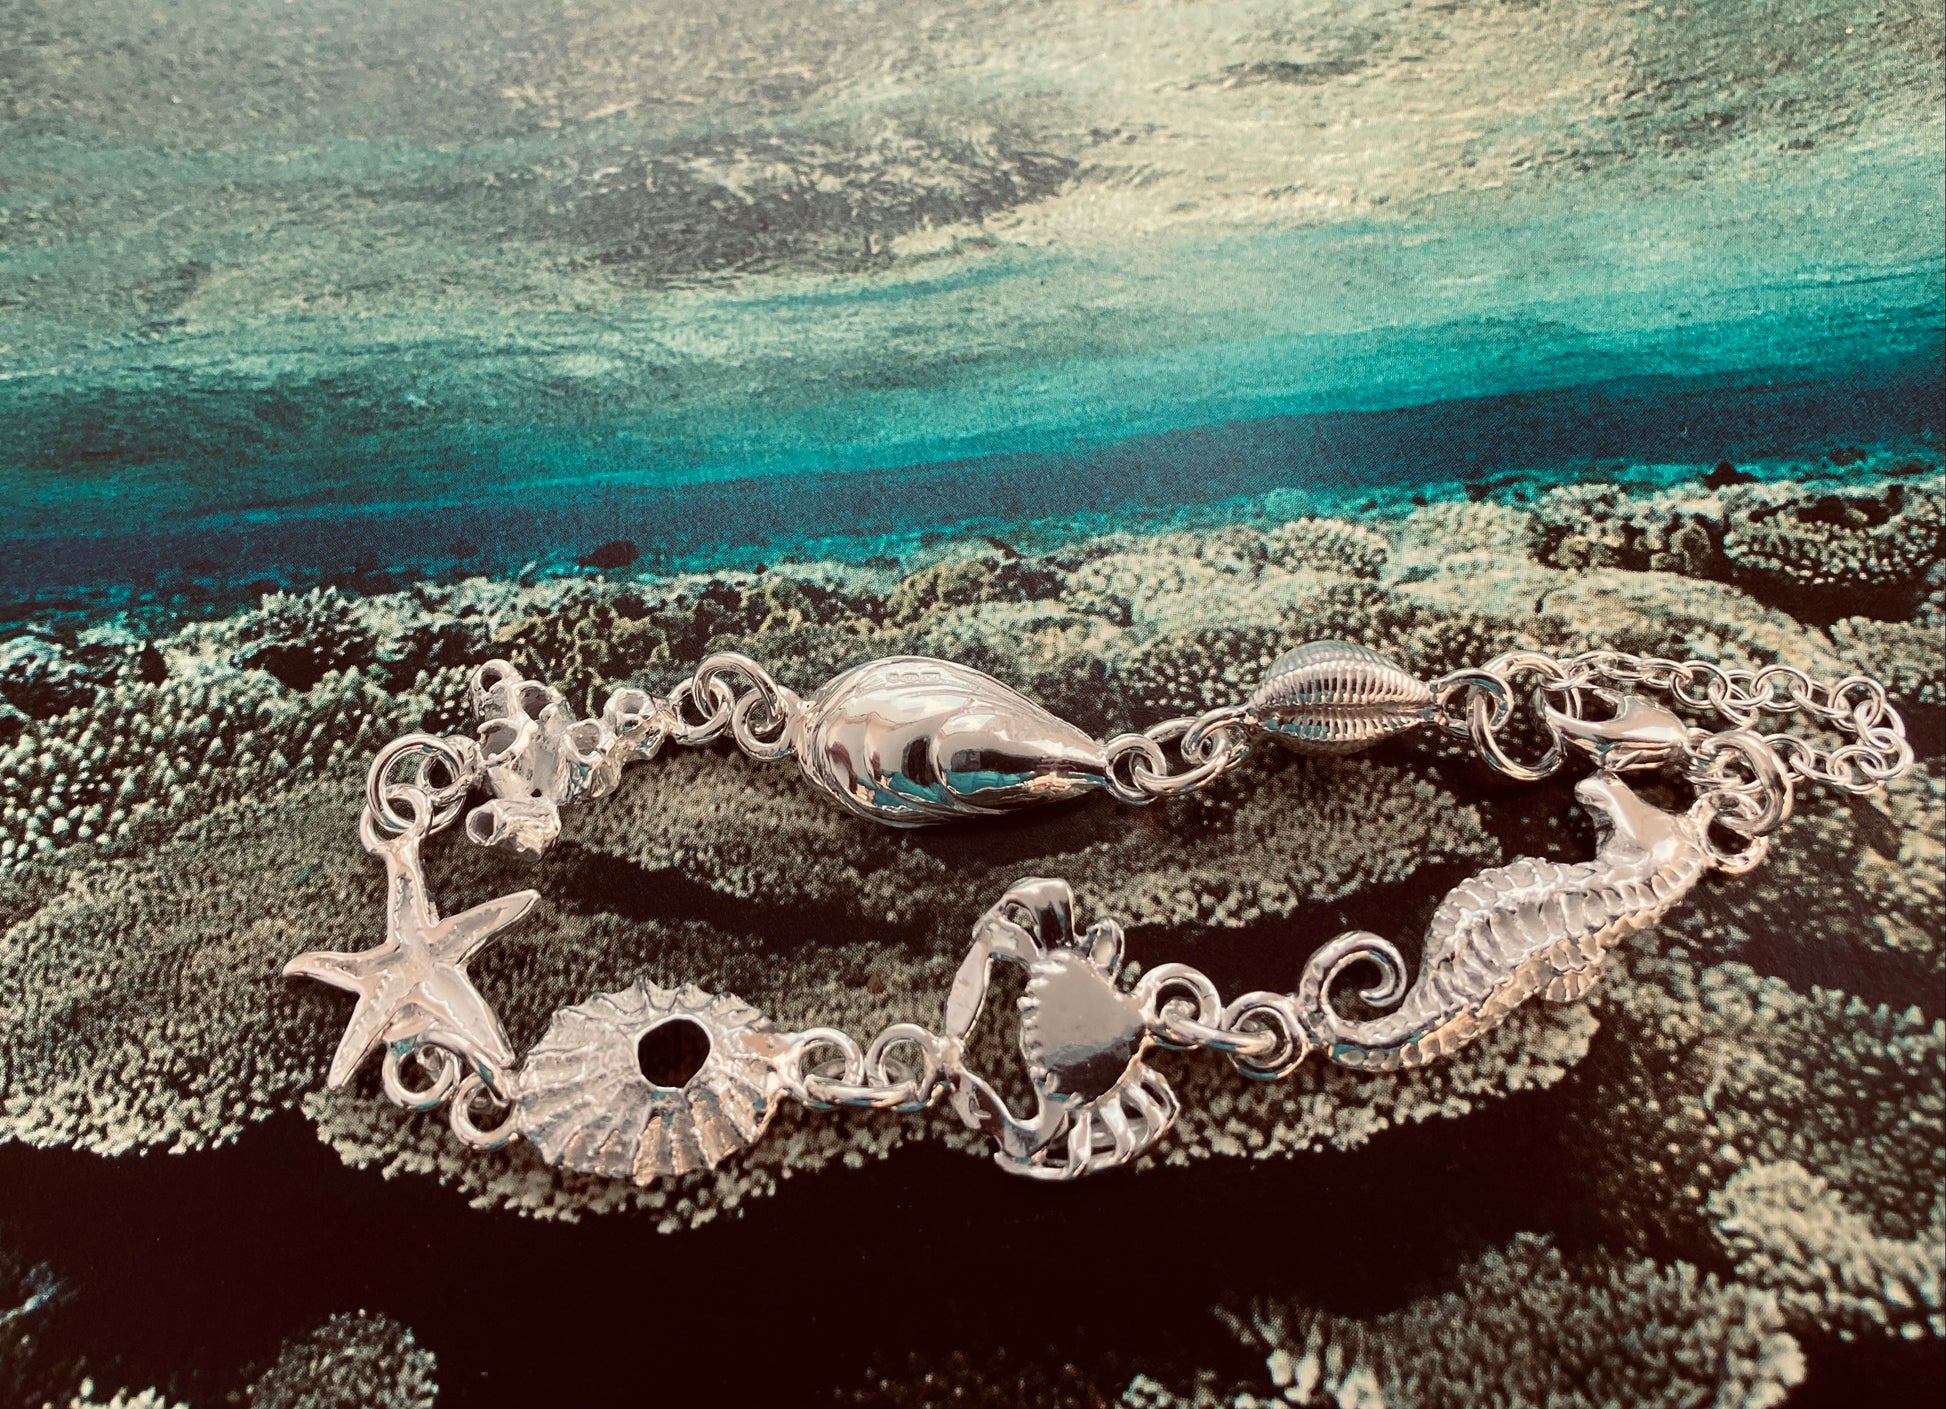 Sea creatures rockpool bracelet